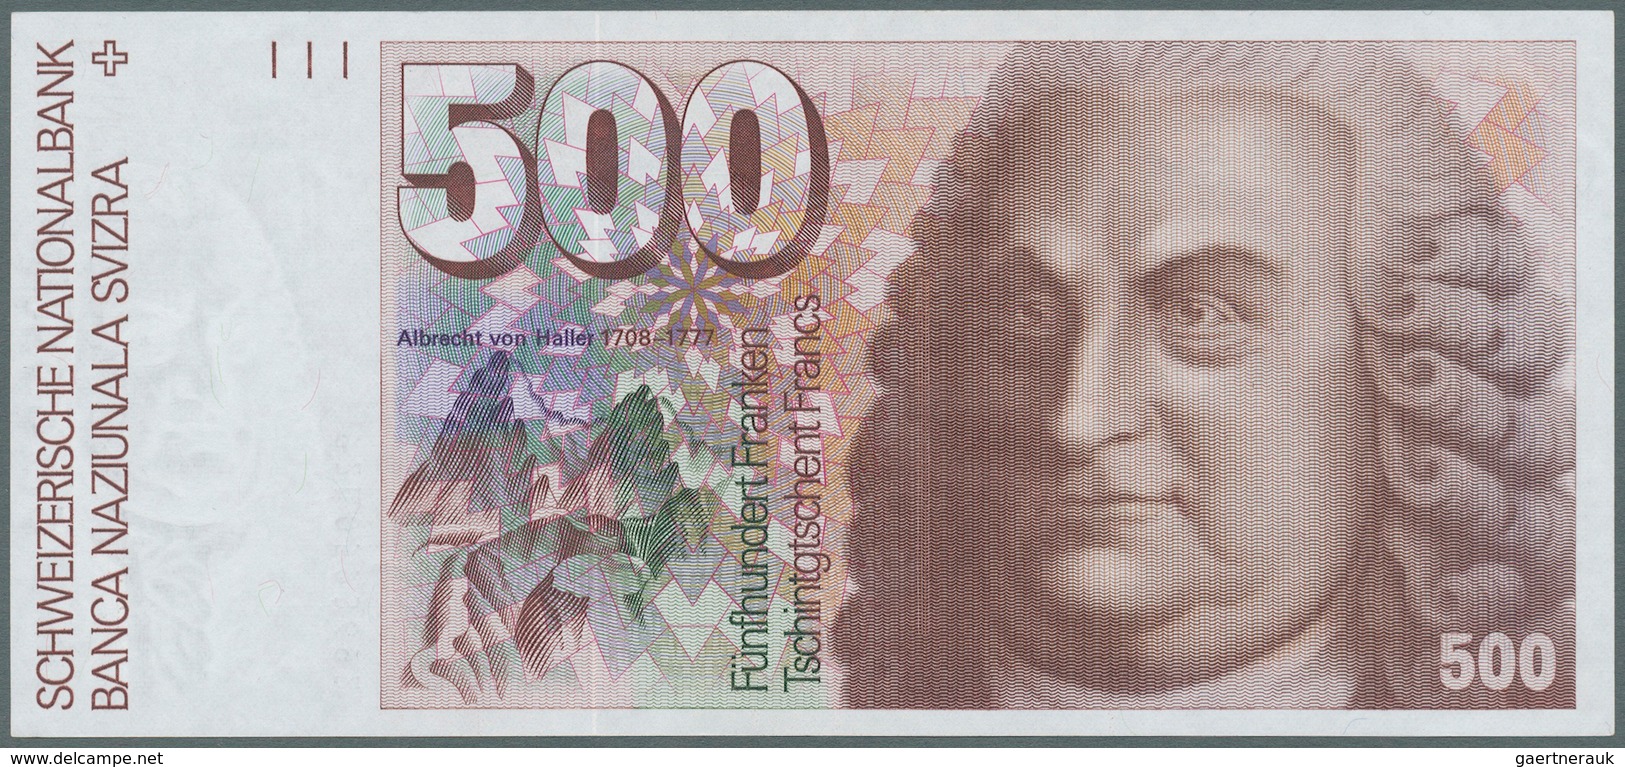 02467 Switzerland / Schweiz: 500 Franken 1992 P. 58c, Key Note, Very Light Center Fold, No Holes Or Tears, - Suiza